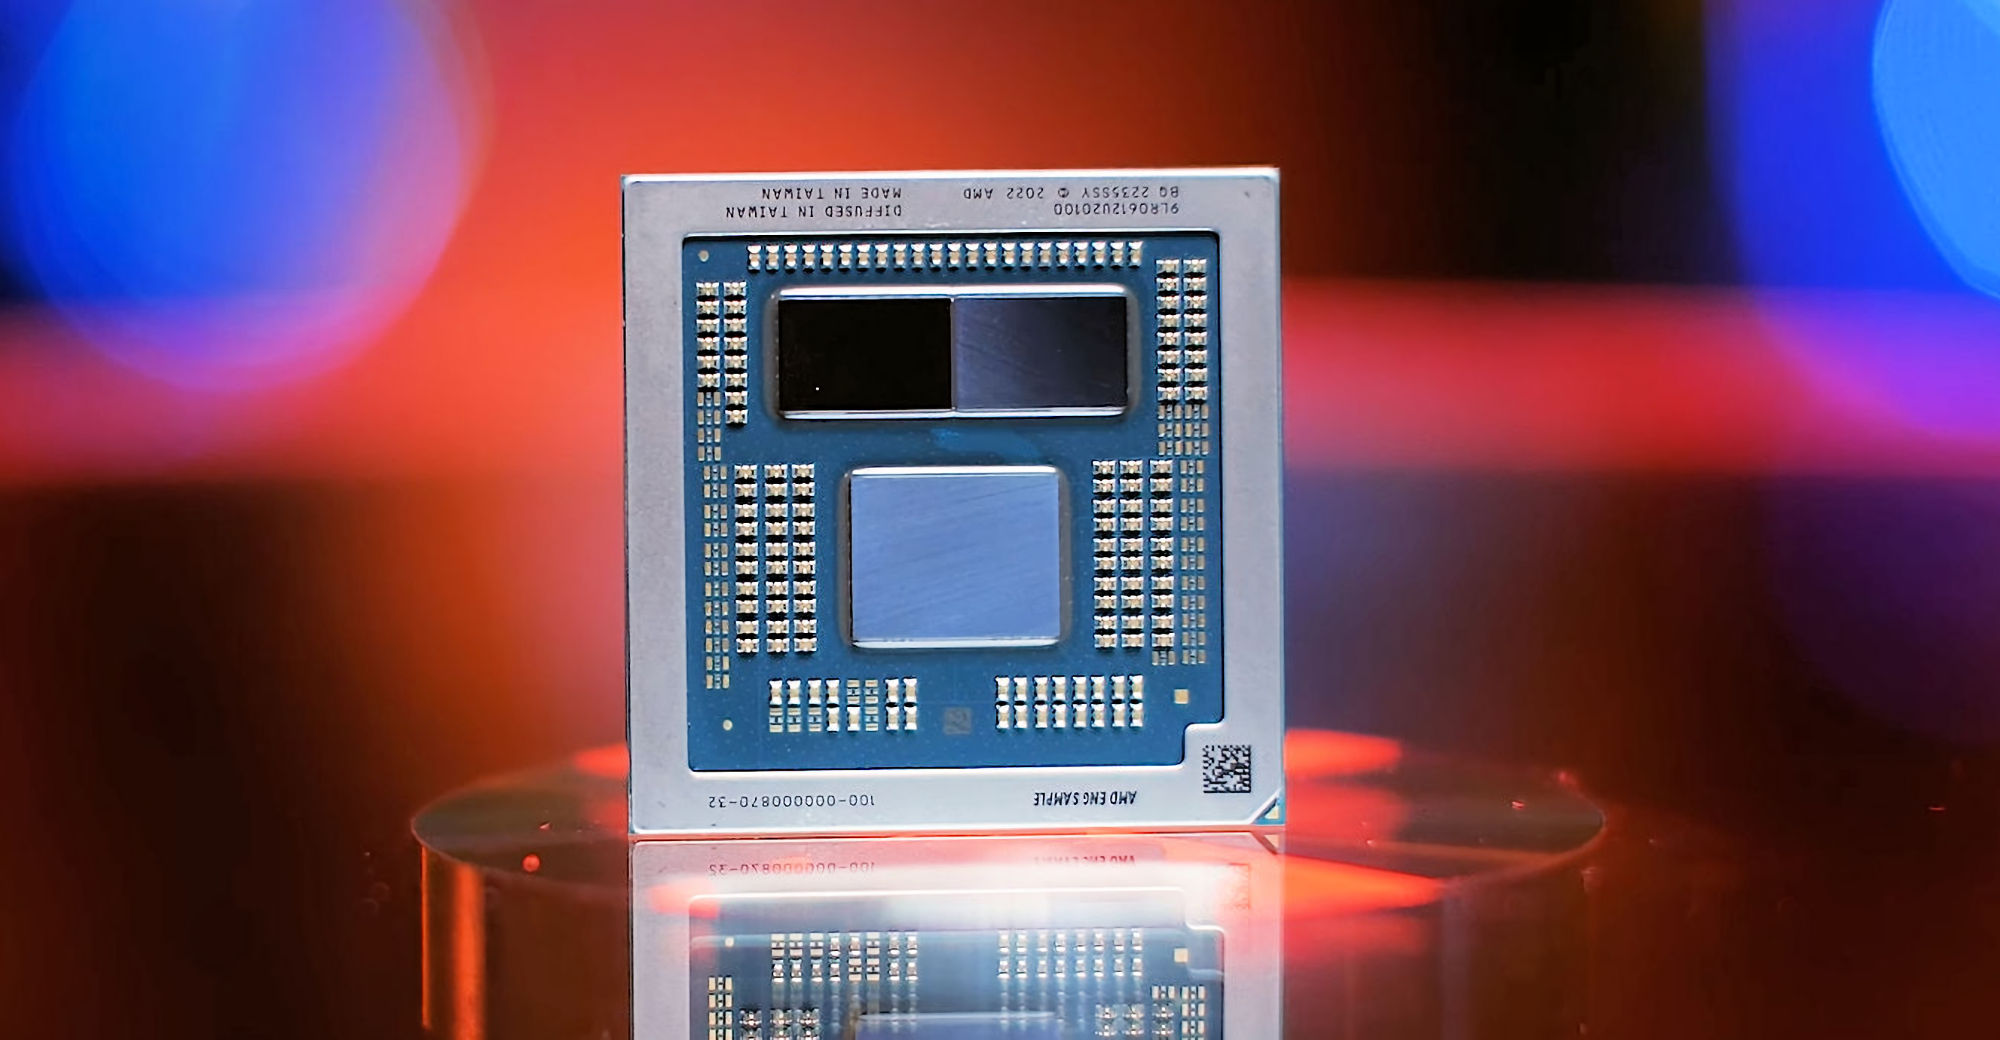 MINISFORUM Introduces B550 Pro Mini-PC with DGPU Expansion Options